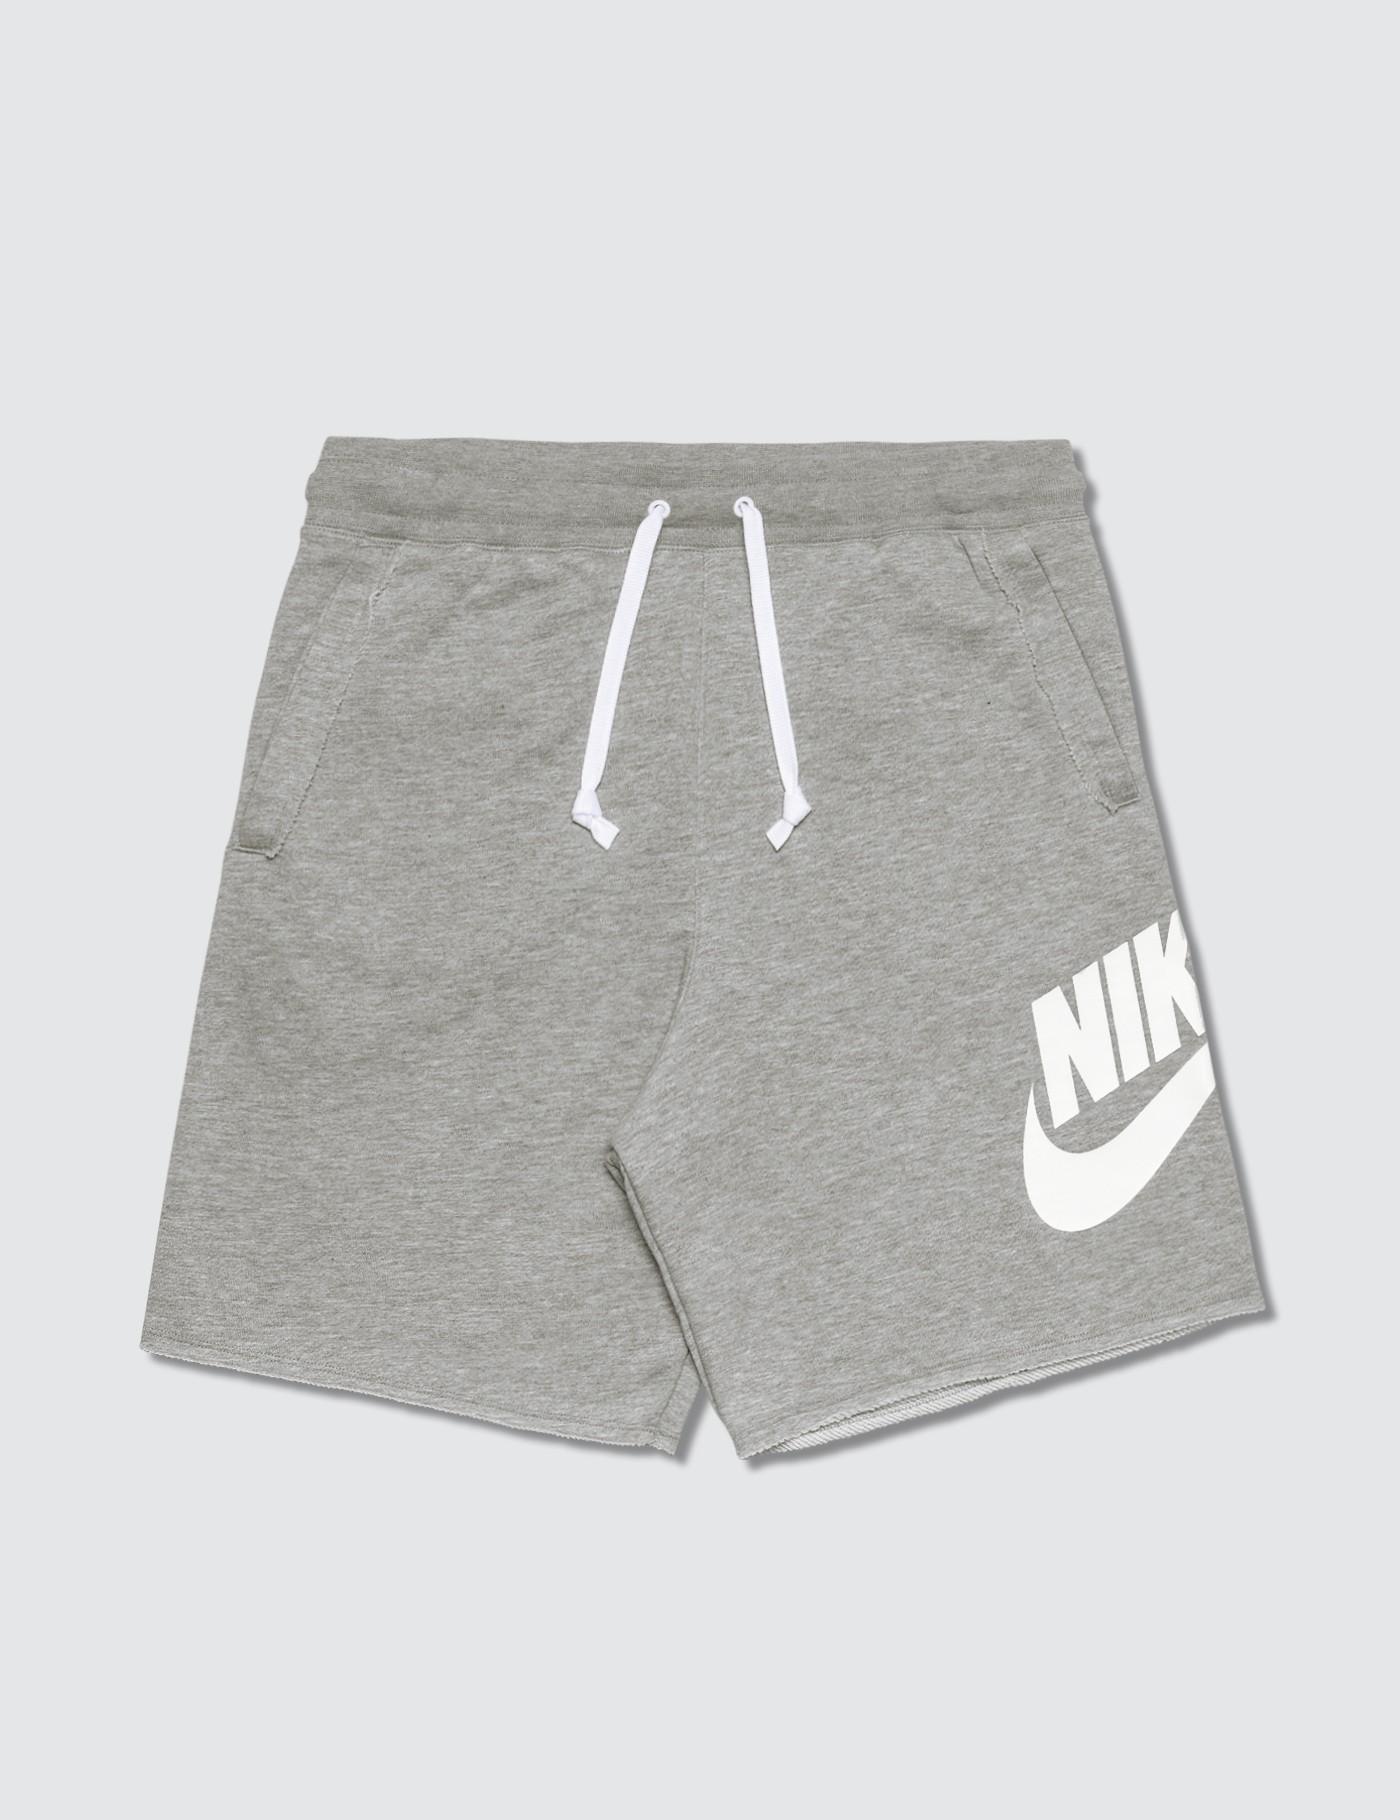 grey nike sweat shorts